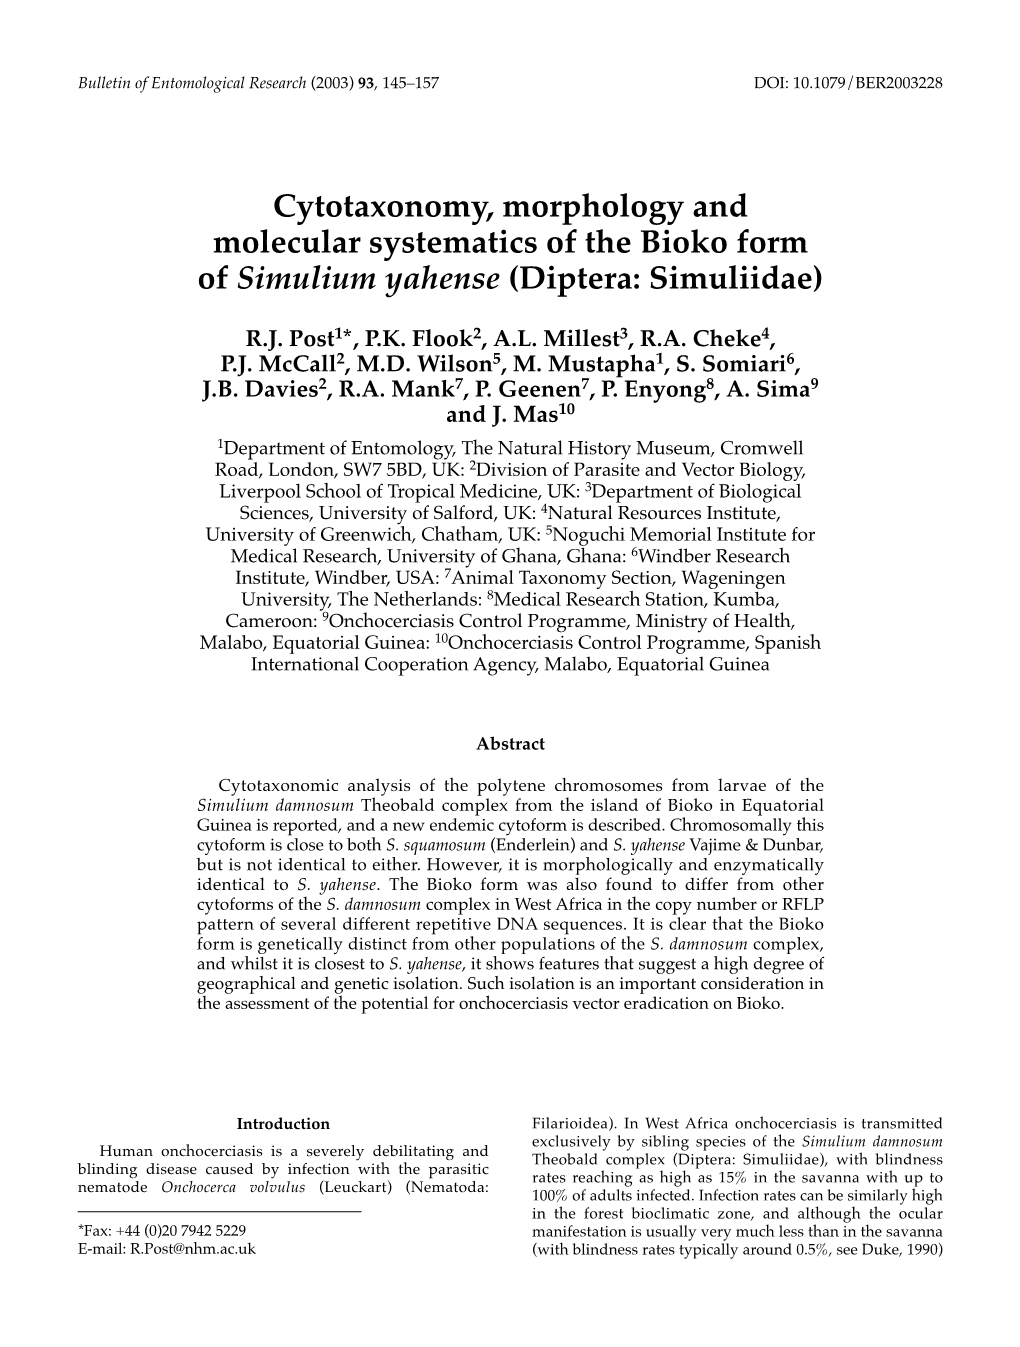 Cytotaxonomy, Morphology and Molecular Systematics of the Bioko Form of Simulium Yahense (Diptera: Simuliidae)